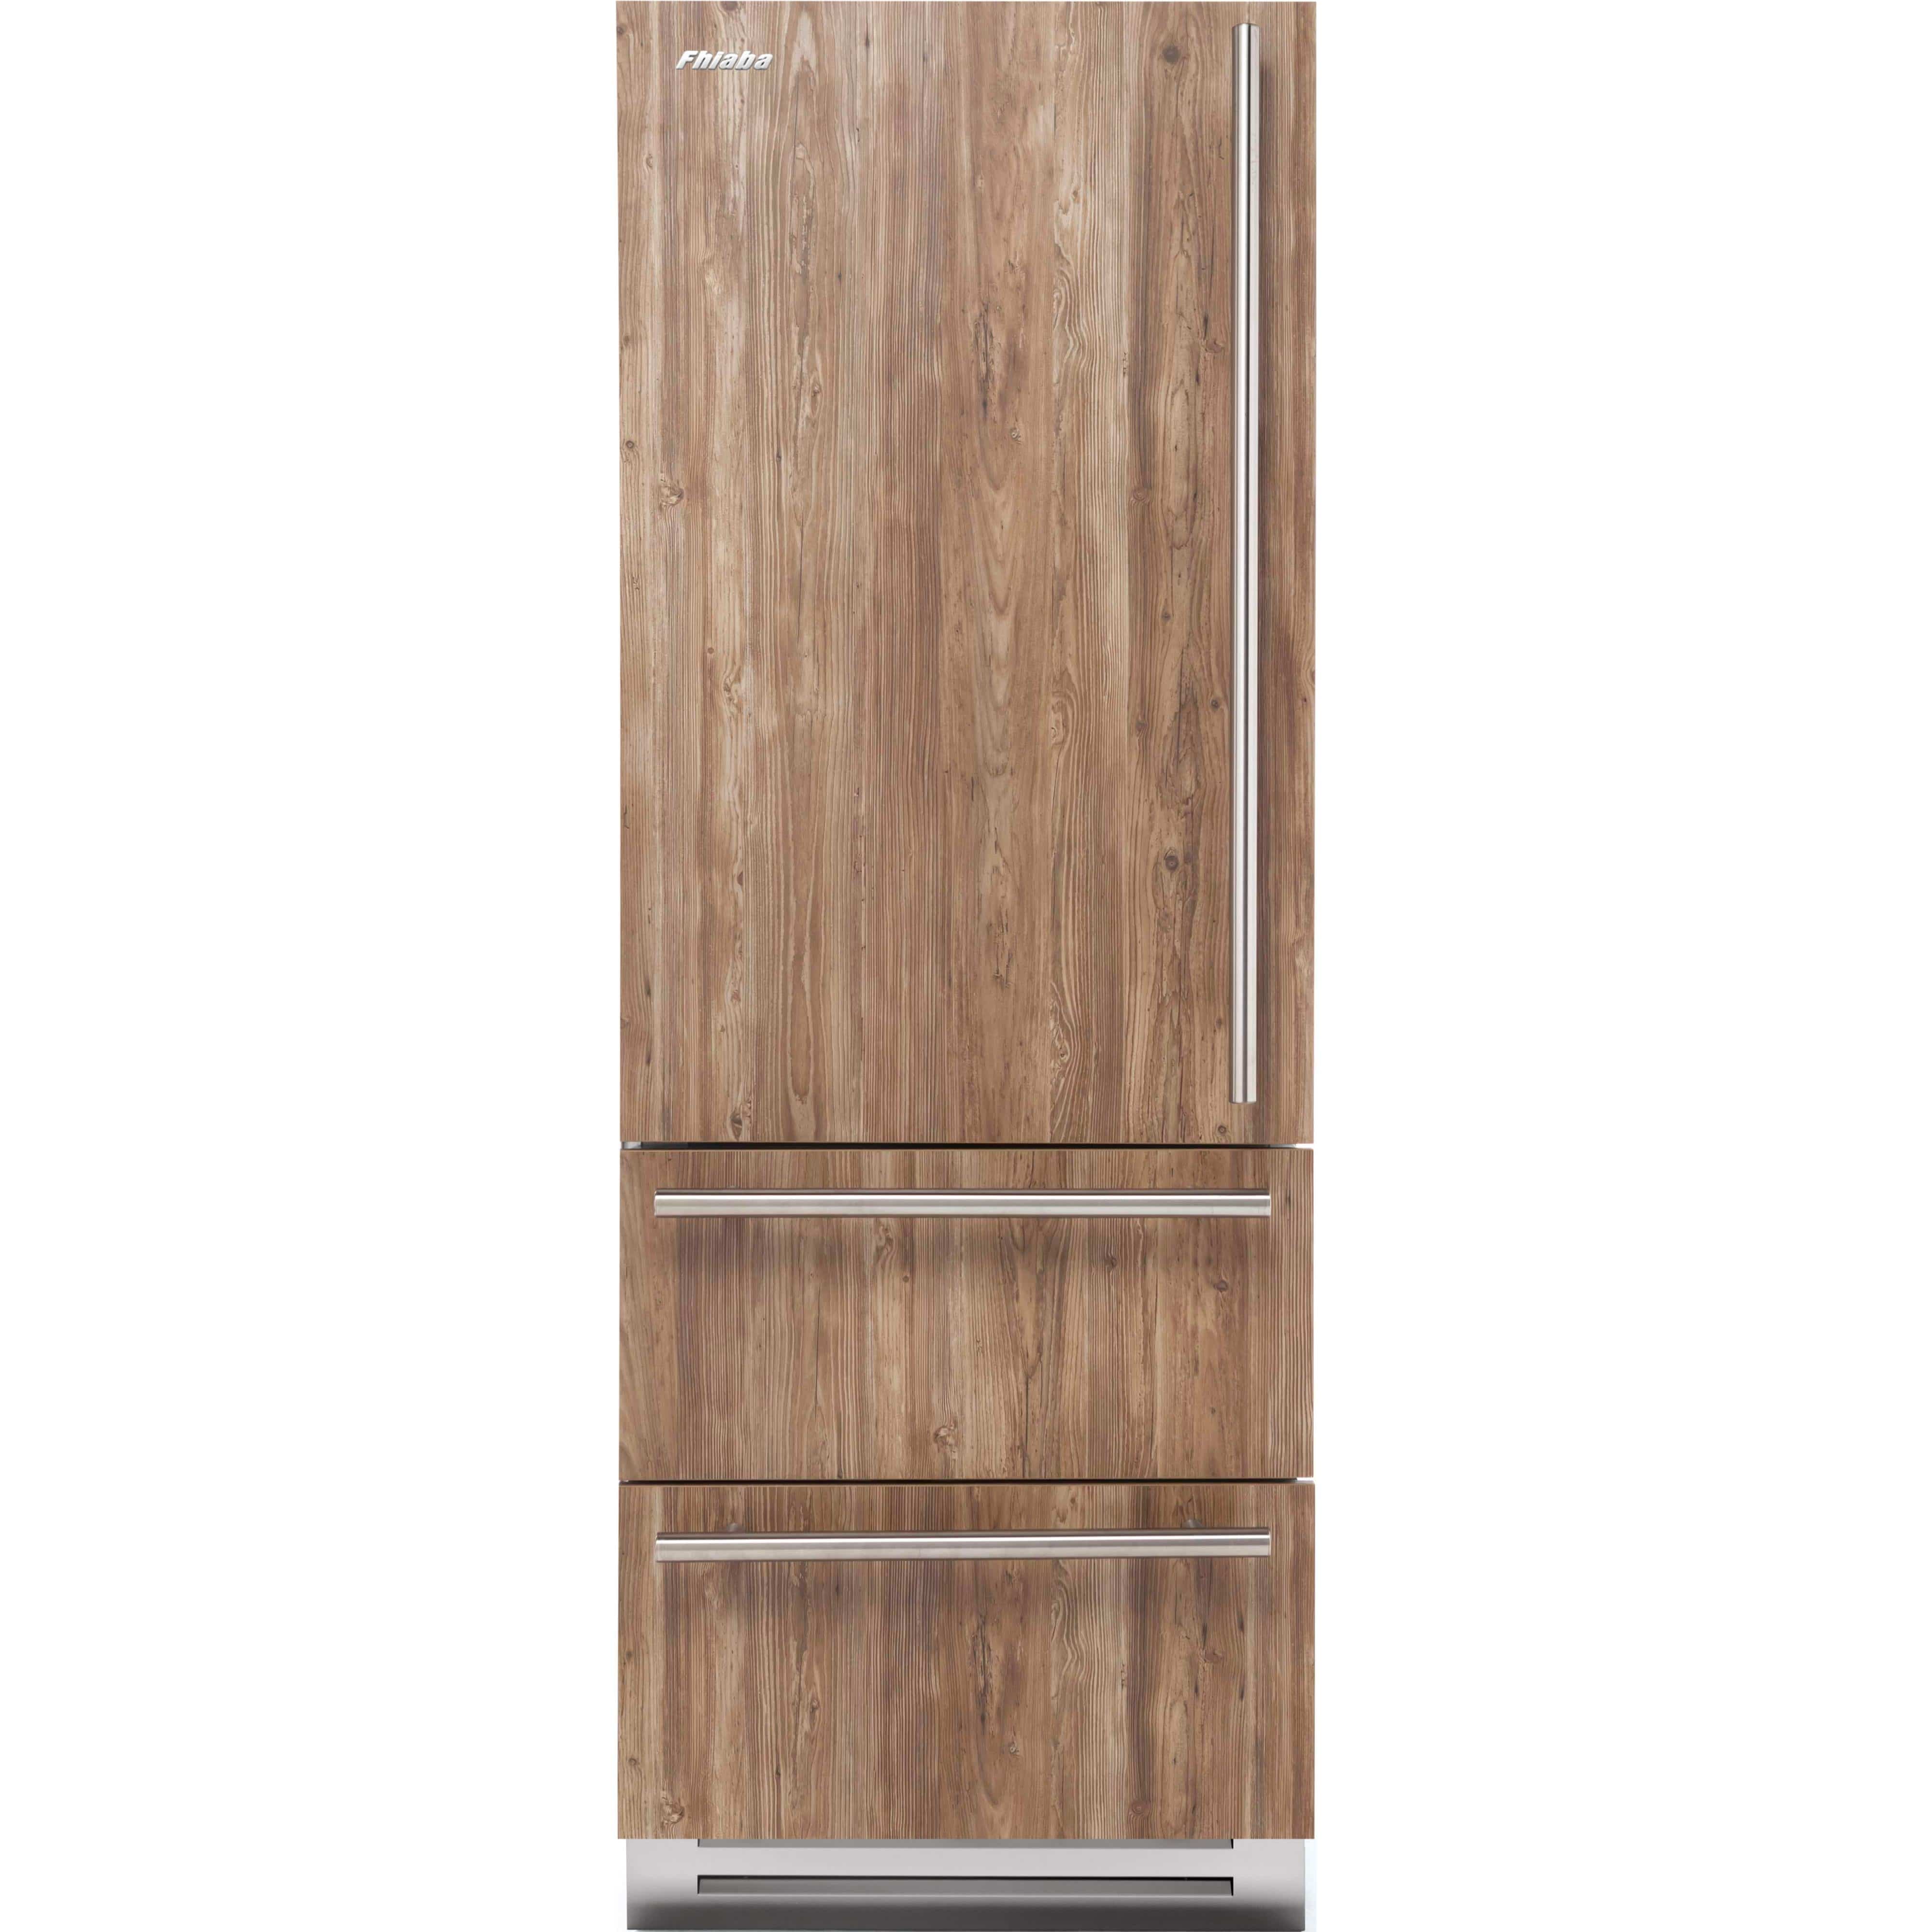 Fhiaba 30-inch Bottom Freezer Refrigerator FI30BDI-LO1 Refrigerators FI30BDILO1 Luxury Appliances Direct